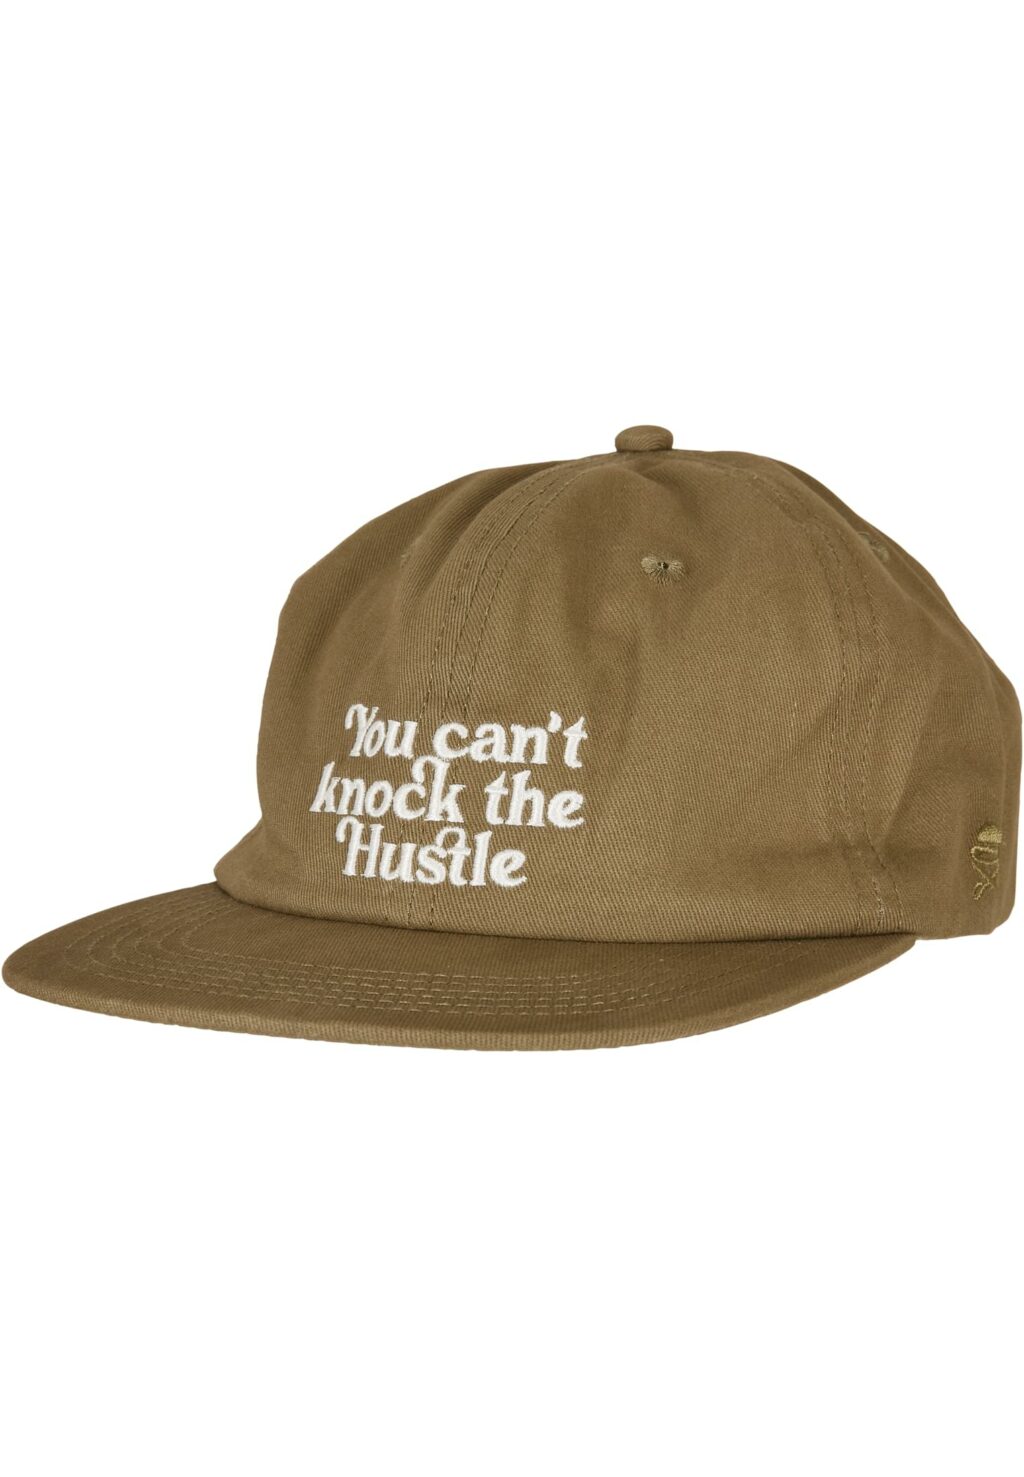 Knock the Hustle Strapback Cap olive/offwhite one CS3001